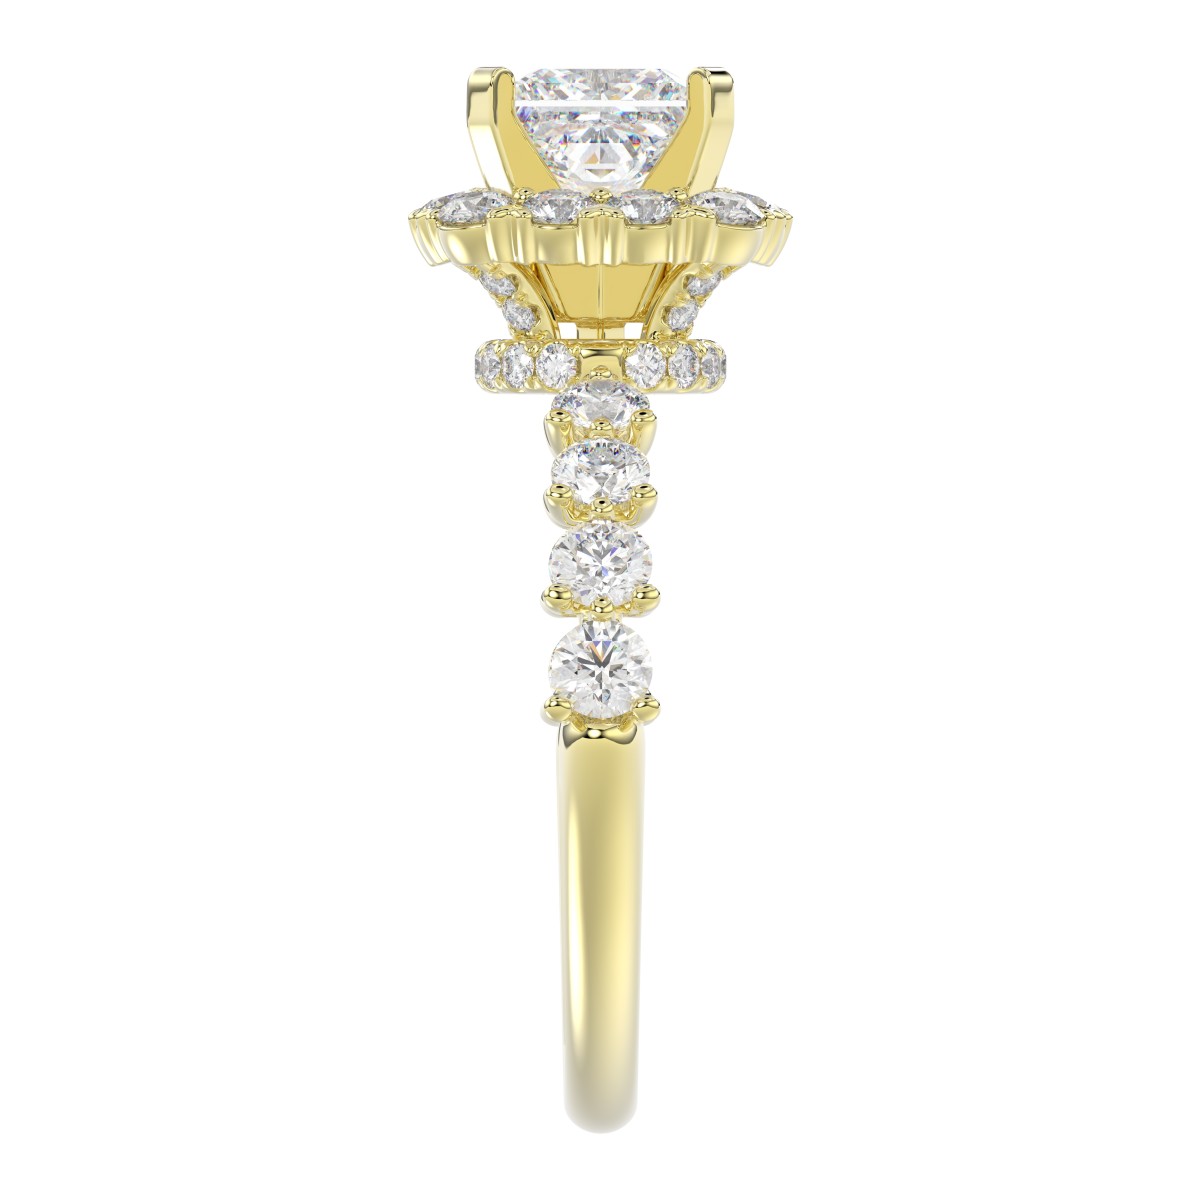 14K YELLOW GOLD 1CT ROUND/PRINCESS DIAMOND LADIES SEMI MOUNT RING(CENTER STONE MOUNT PRINCESS DIAMOND 1CT)